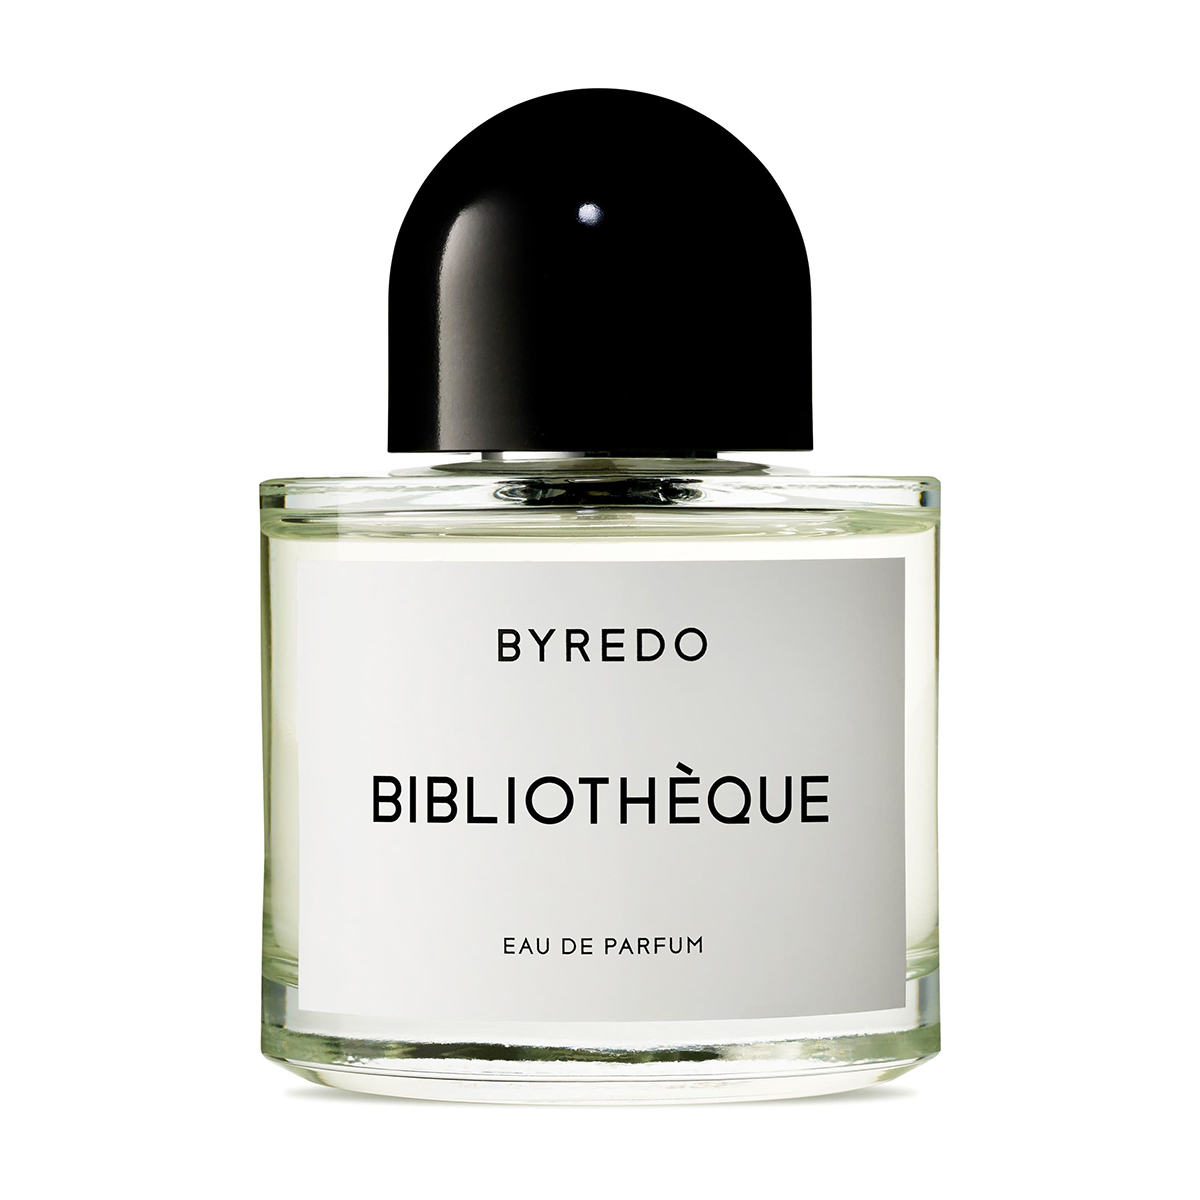 Byredo Bibliothèque Eau de Parfum, 50ml